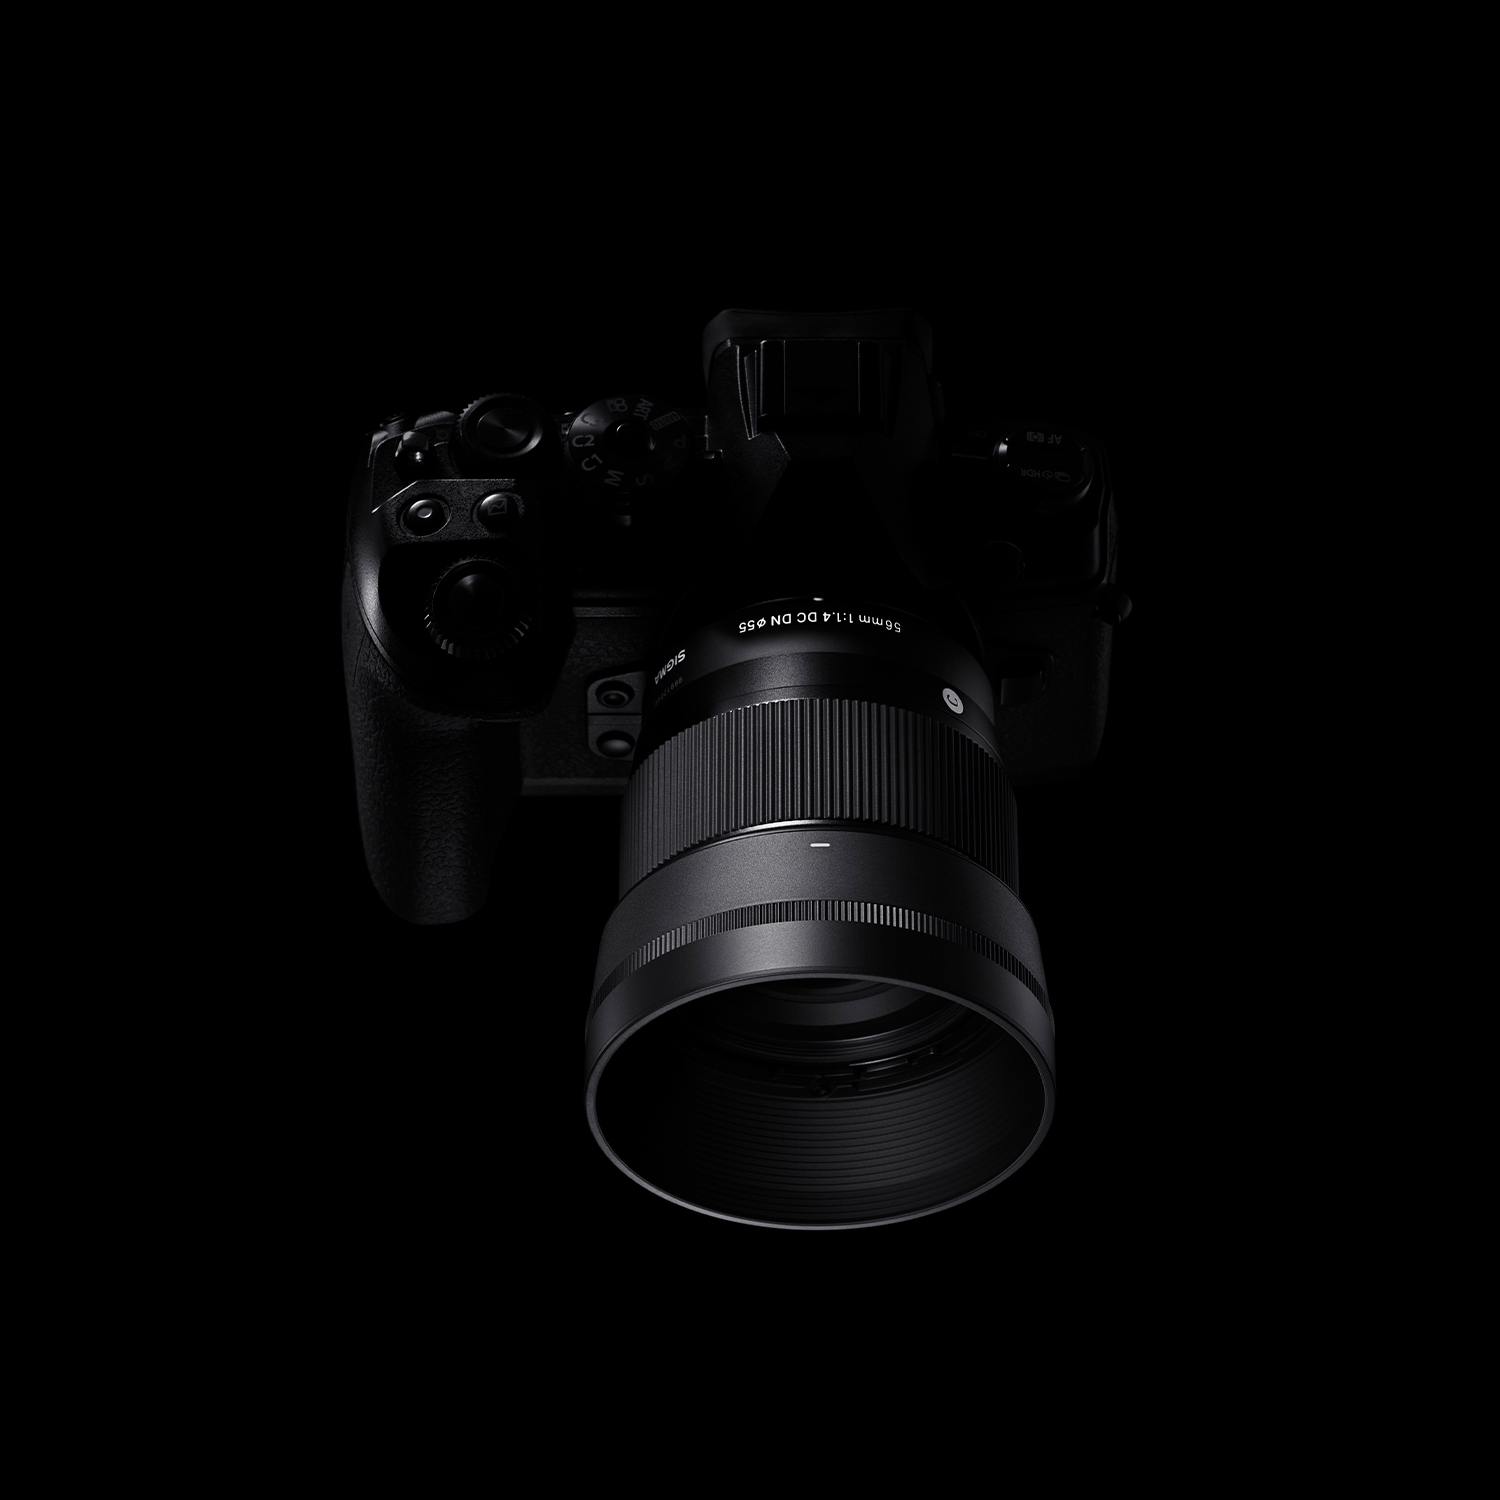 Sigma 56mm F1.4 DC DN HSM Contemporary Lens for Fujifilm X mount